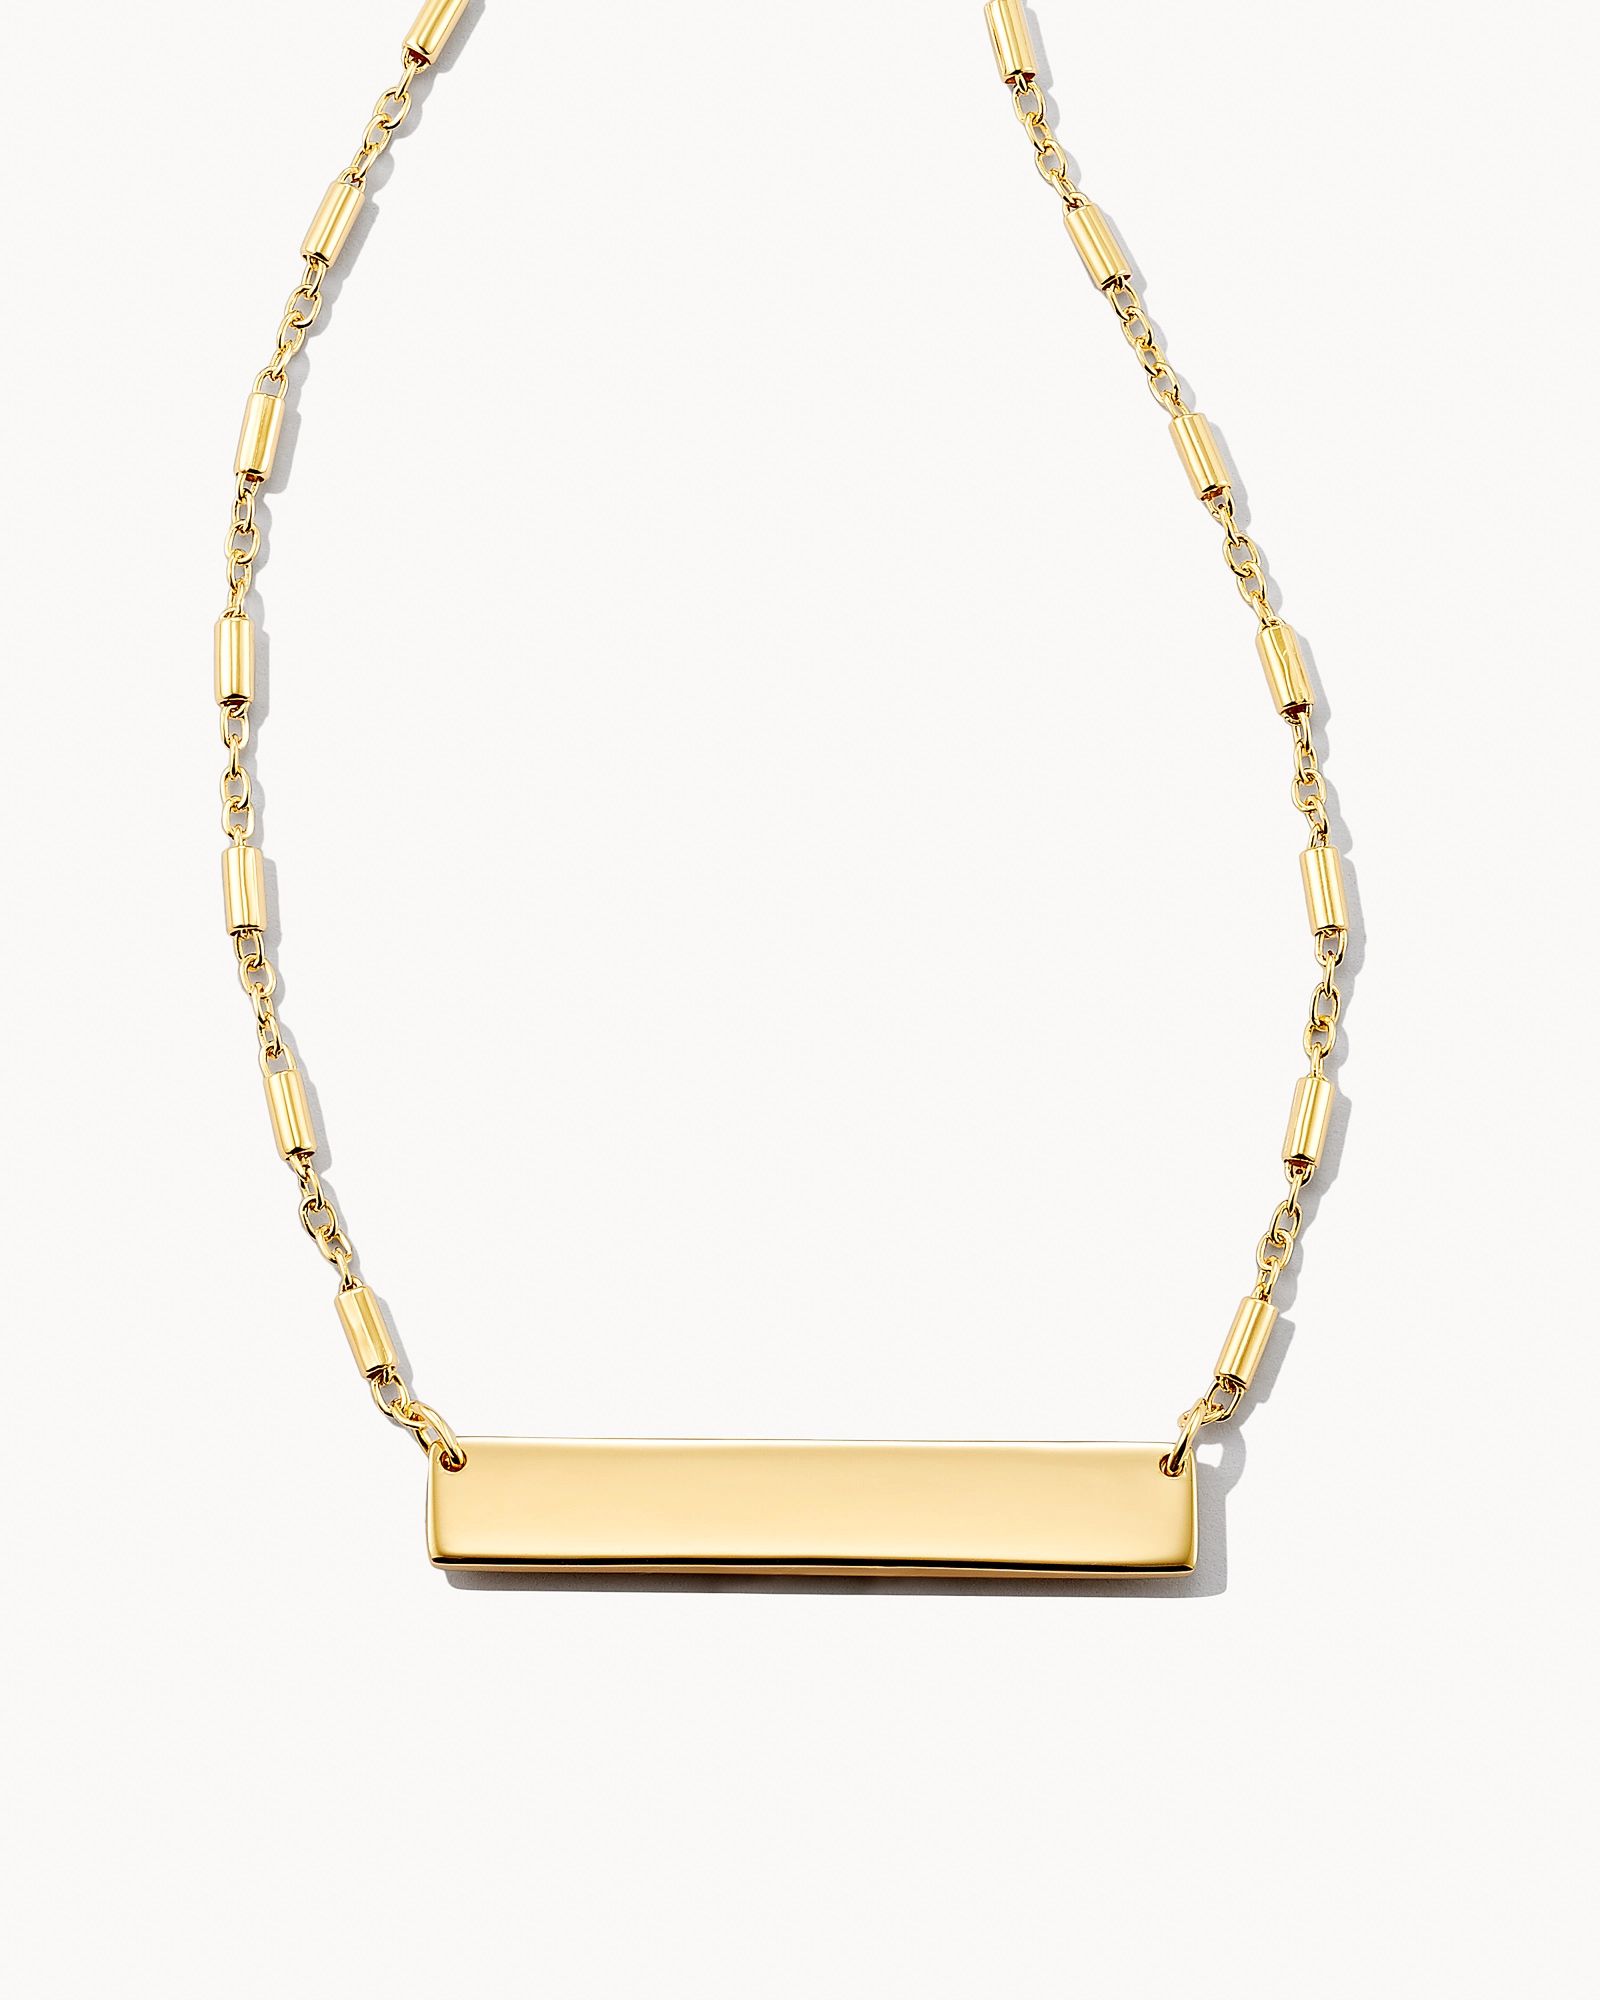 Allison Pendant Necklace in 18k Yellow Gold Vermeil | Kendra Scott